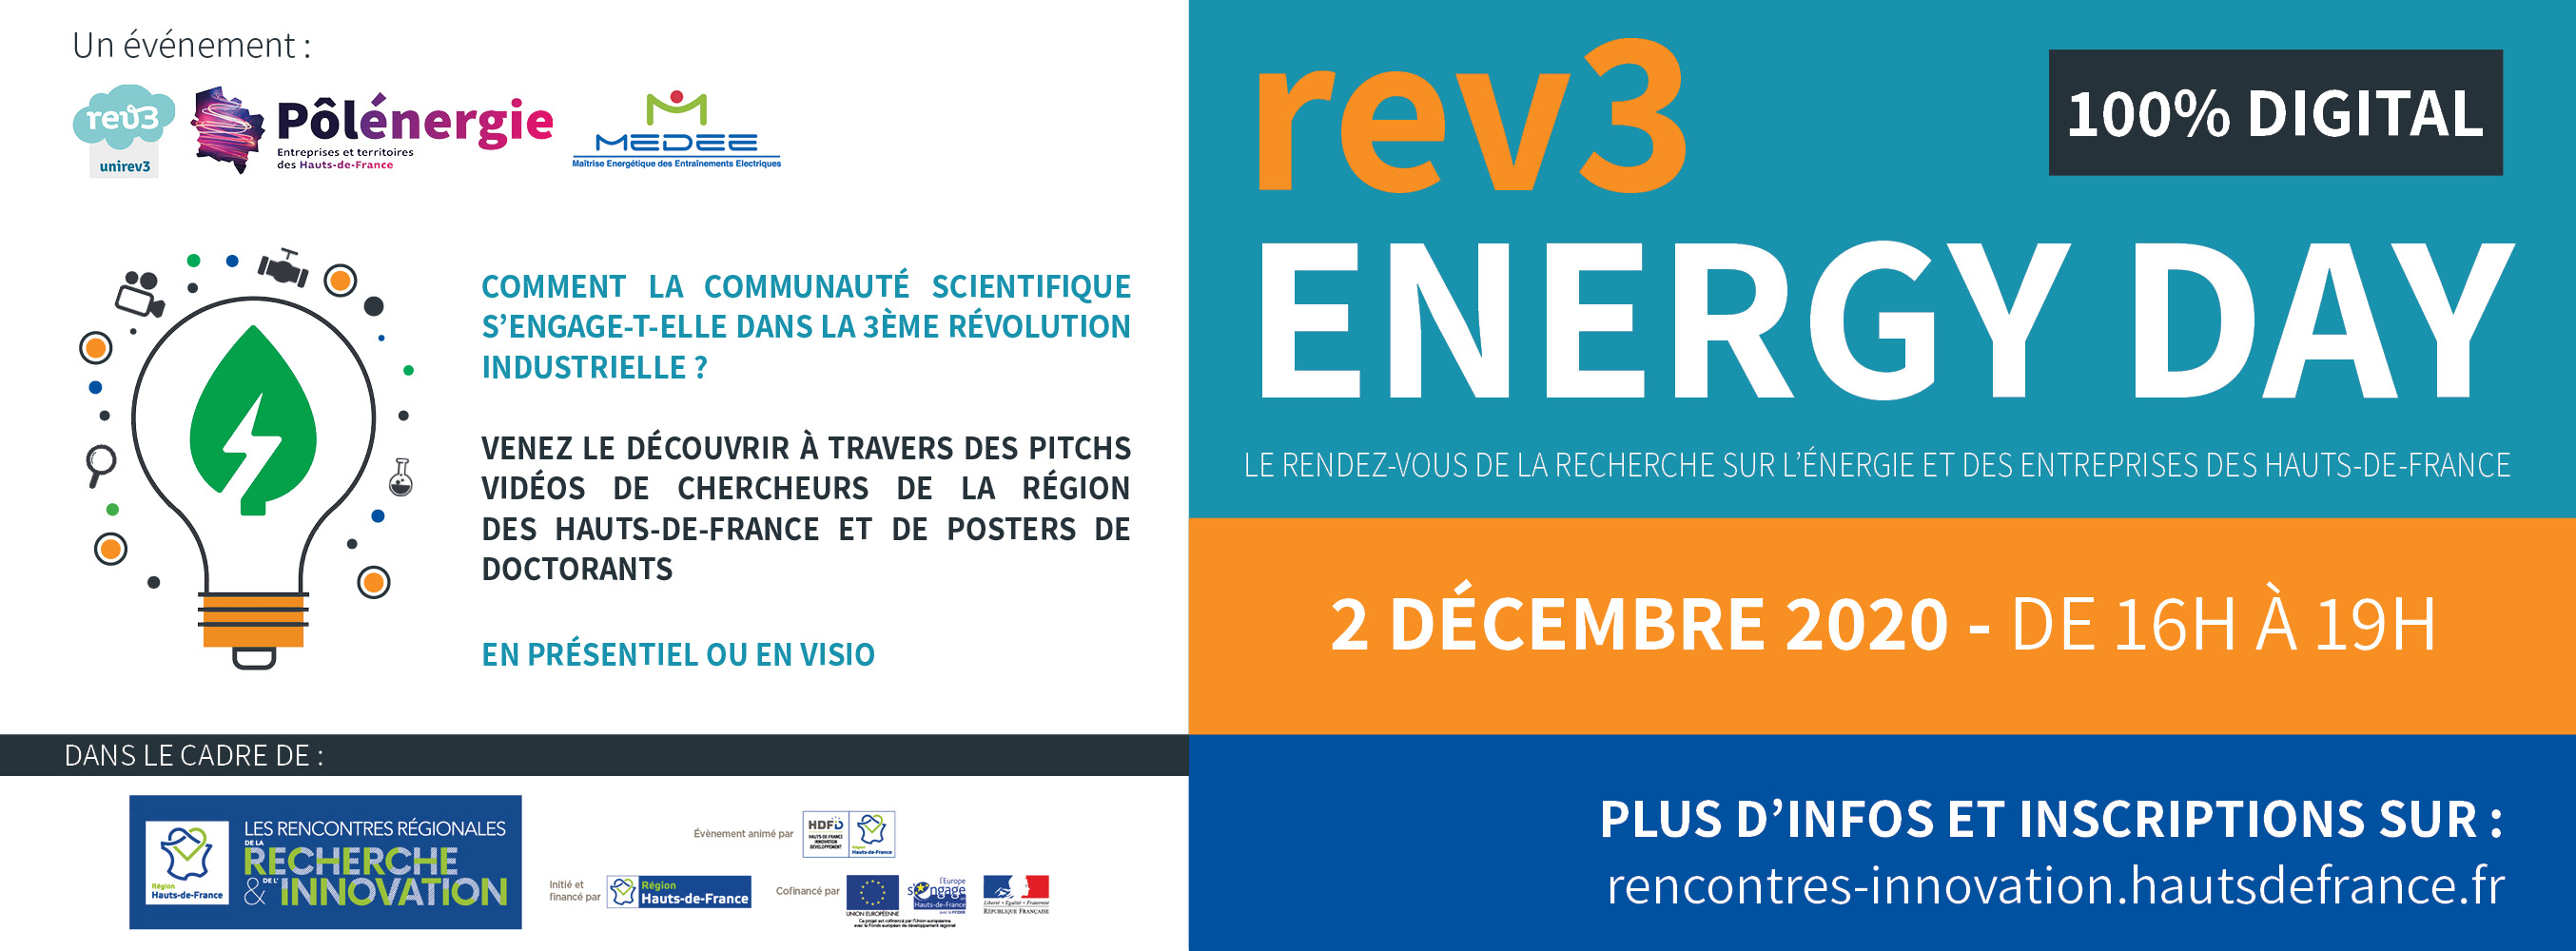 Rev3 Energy Day 2020